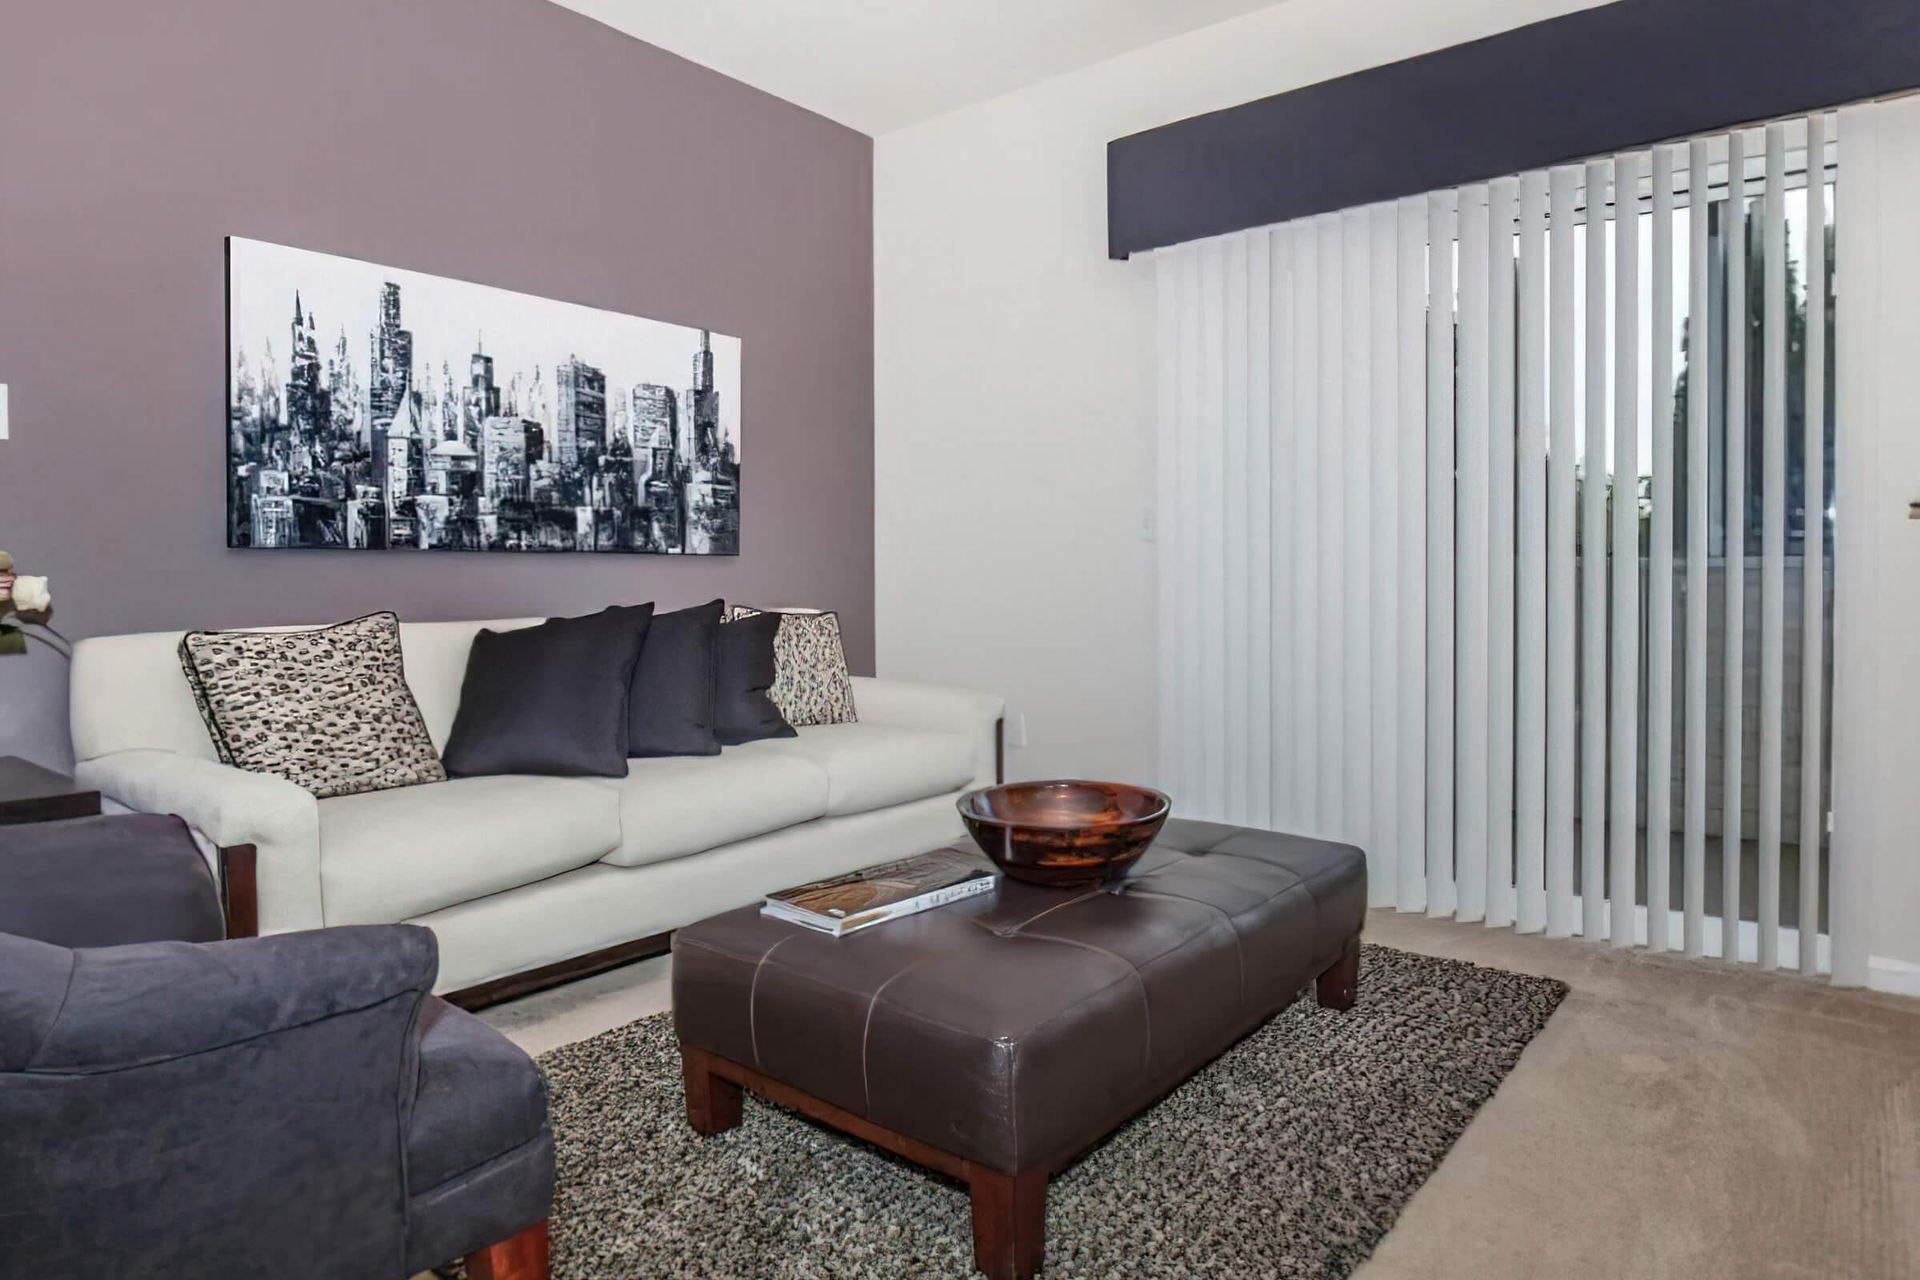 Echo Ridge apartment living room with luxury interior like modern sofa, coffee table, wall art, and spacious balcony window.